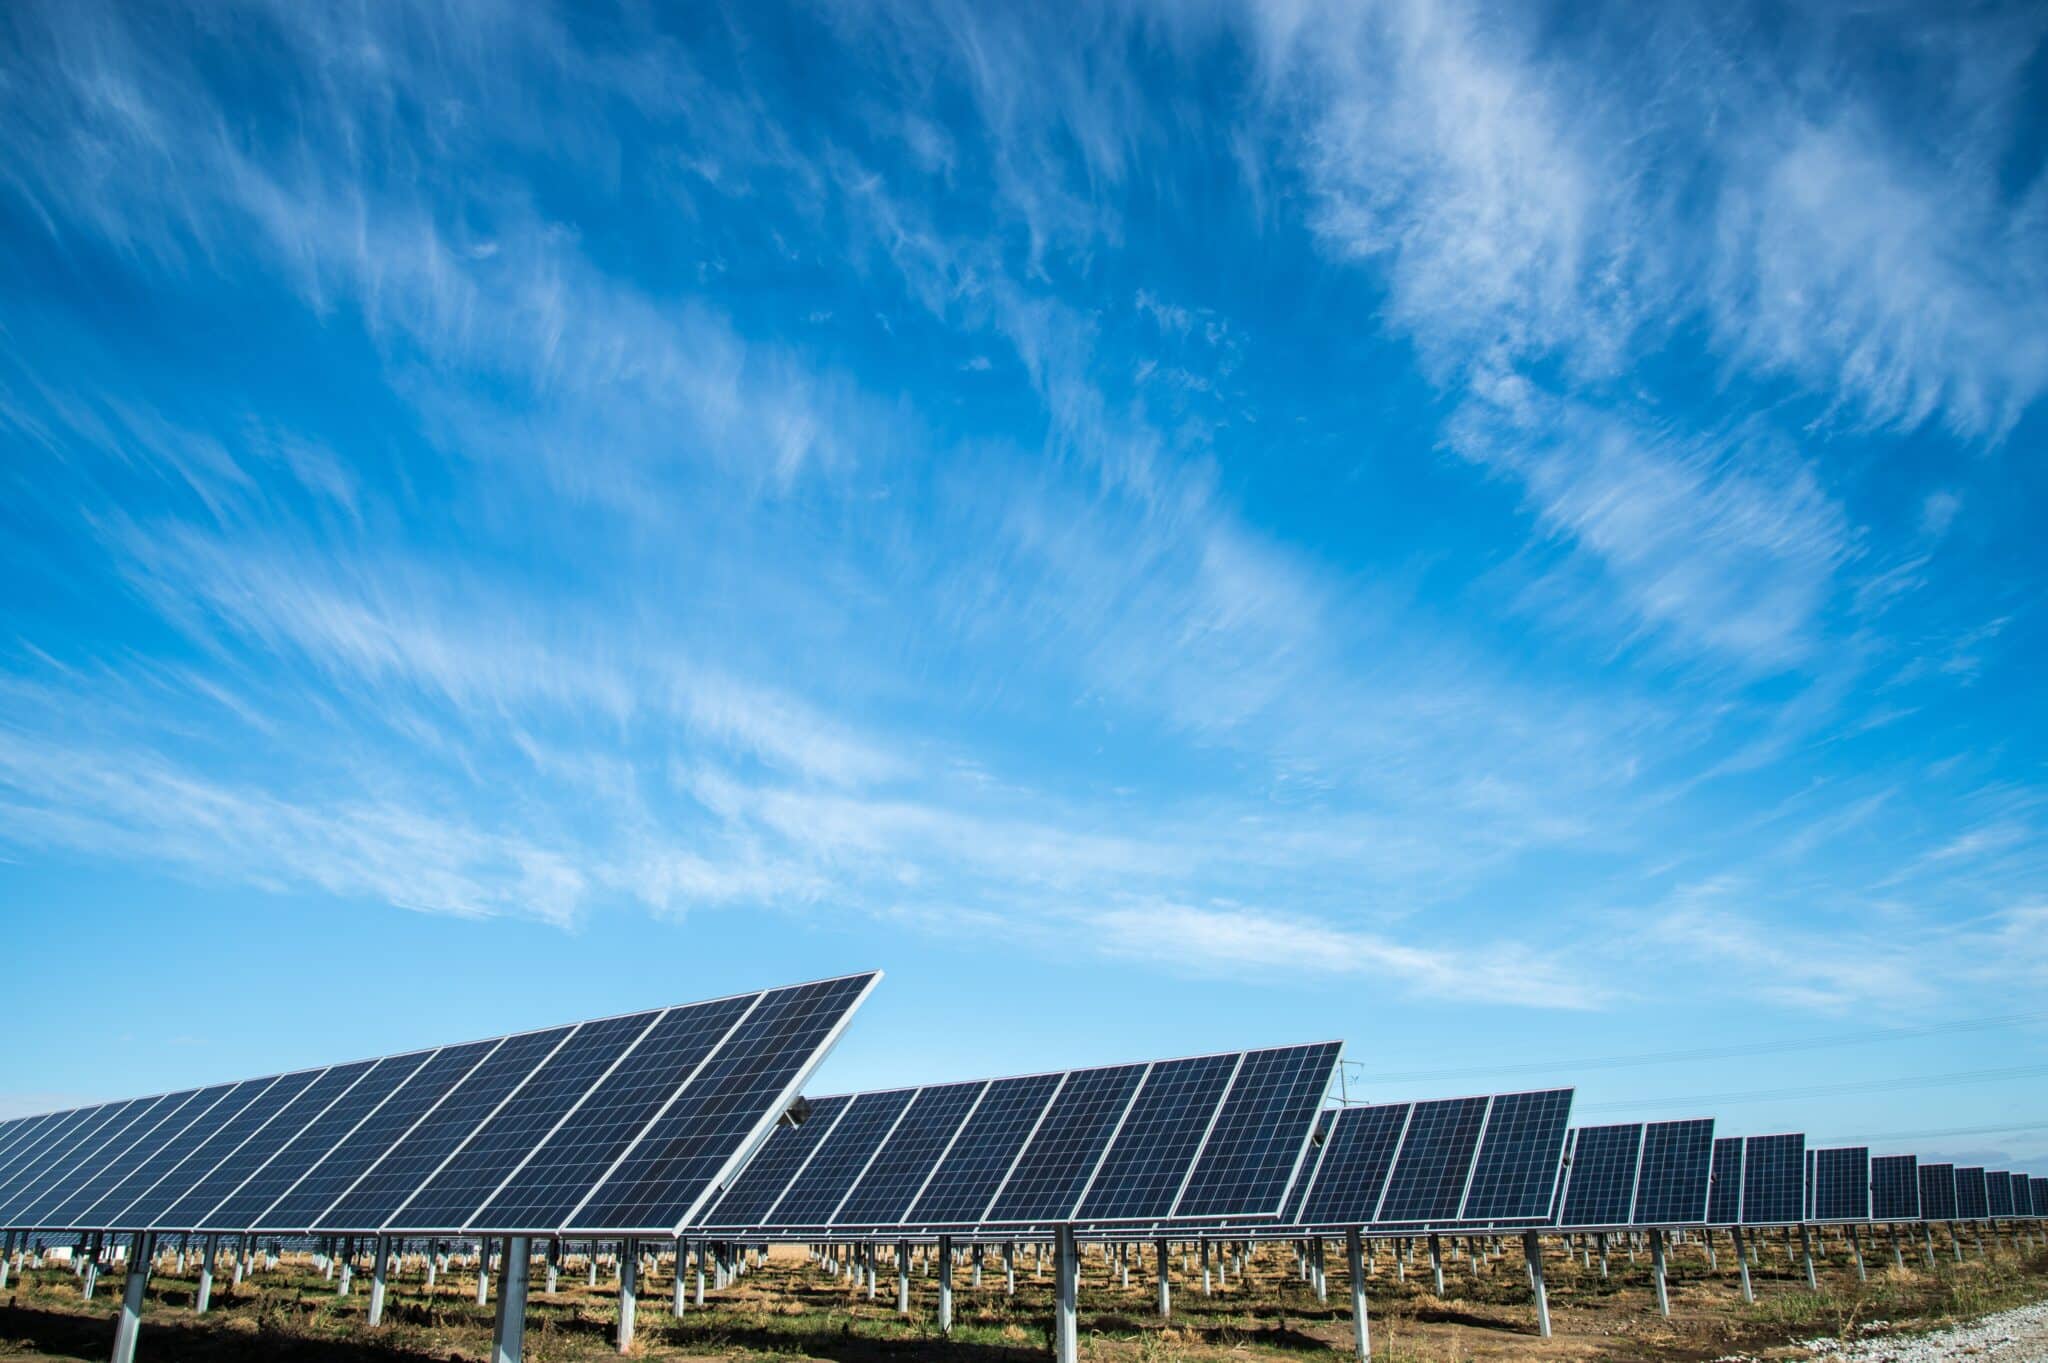 Community solar farm producing large-scale power